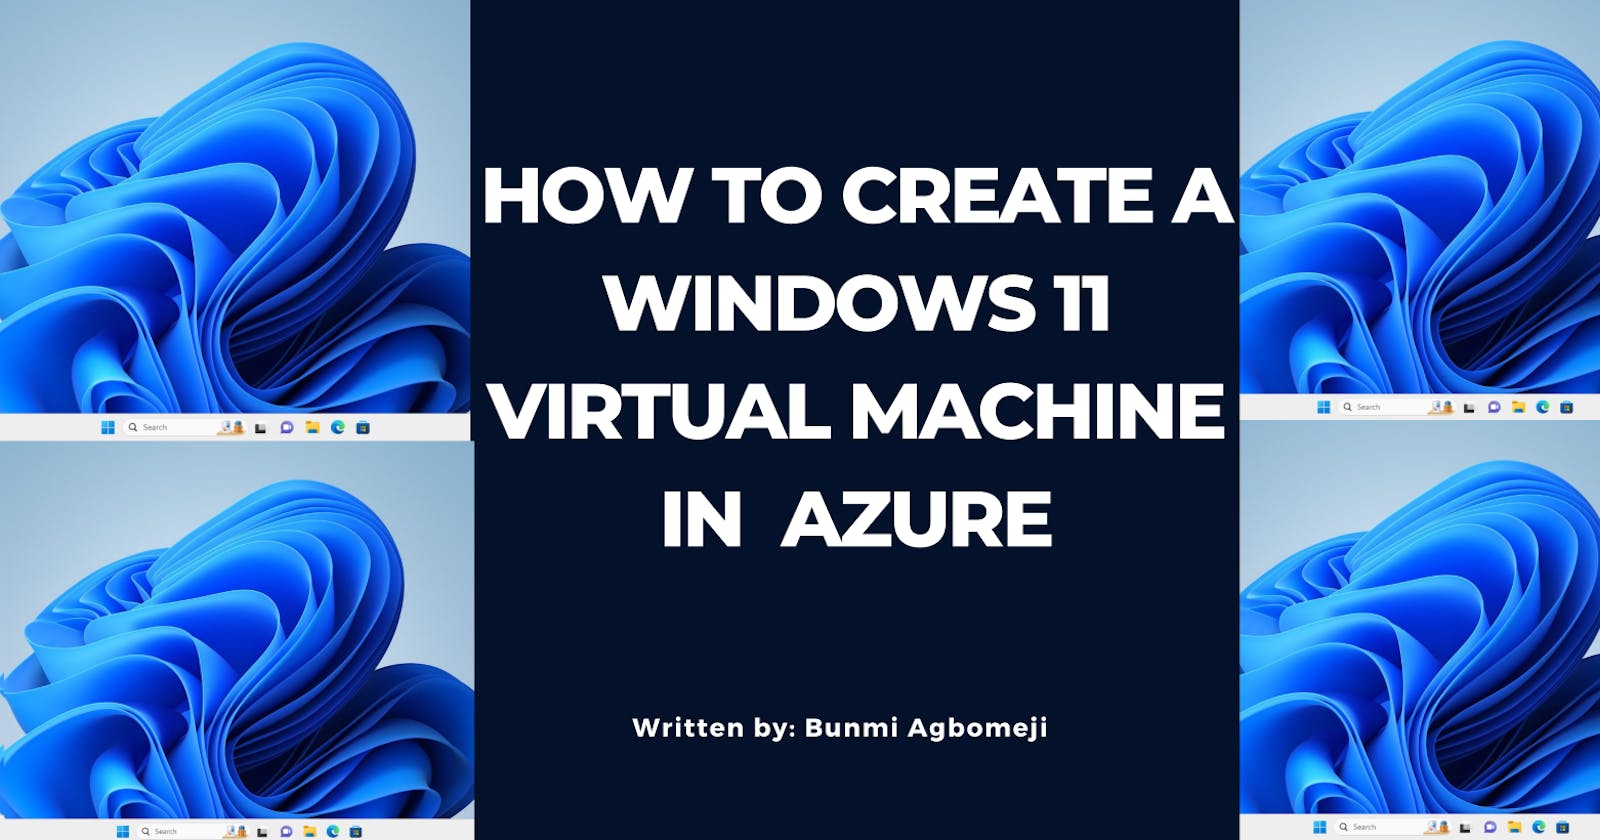 How To Create a Windows 11 Virtual Machine